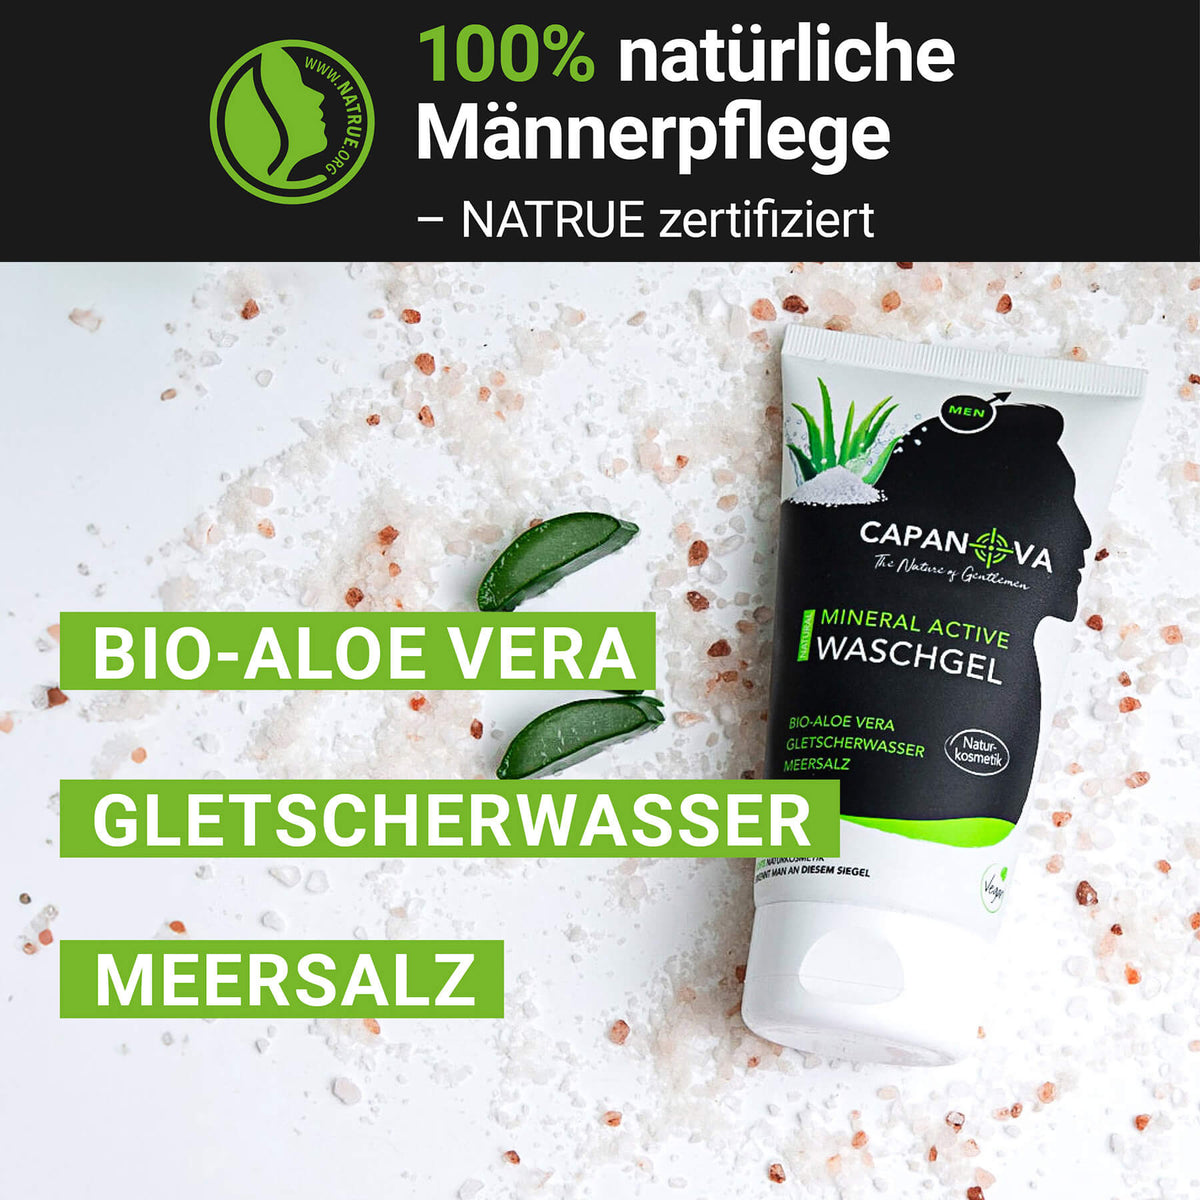 Natural Mineral Active Waschgel